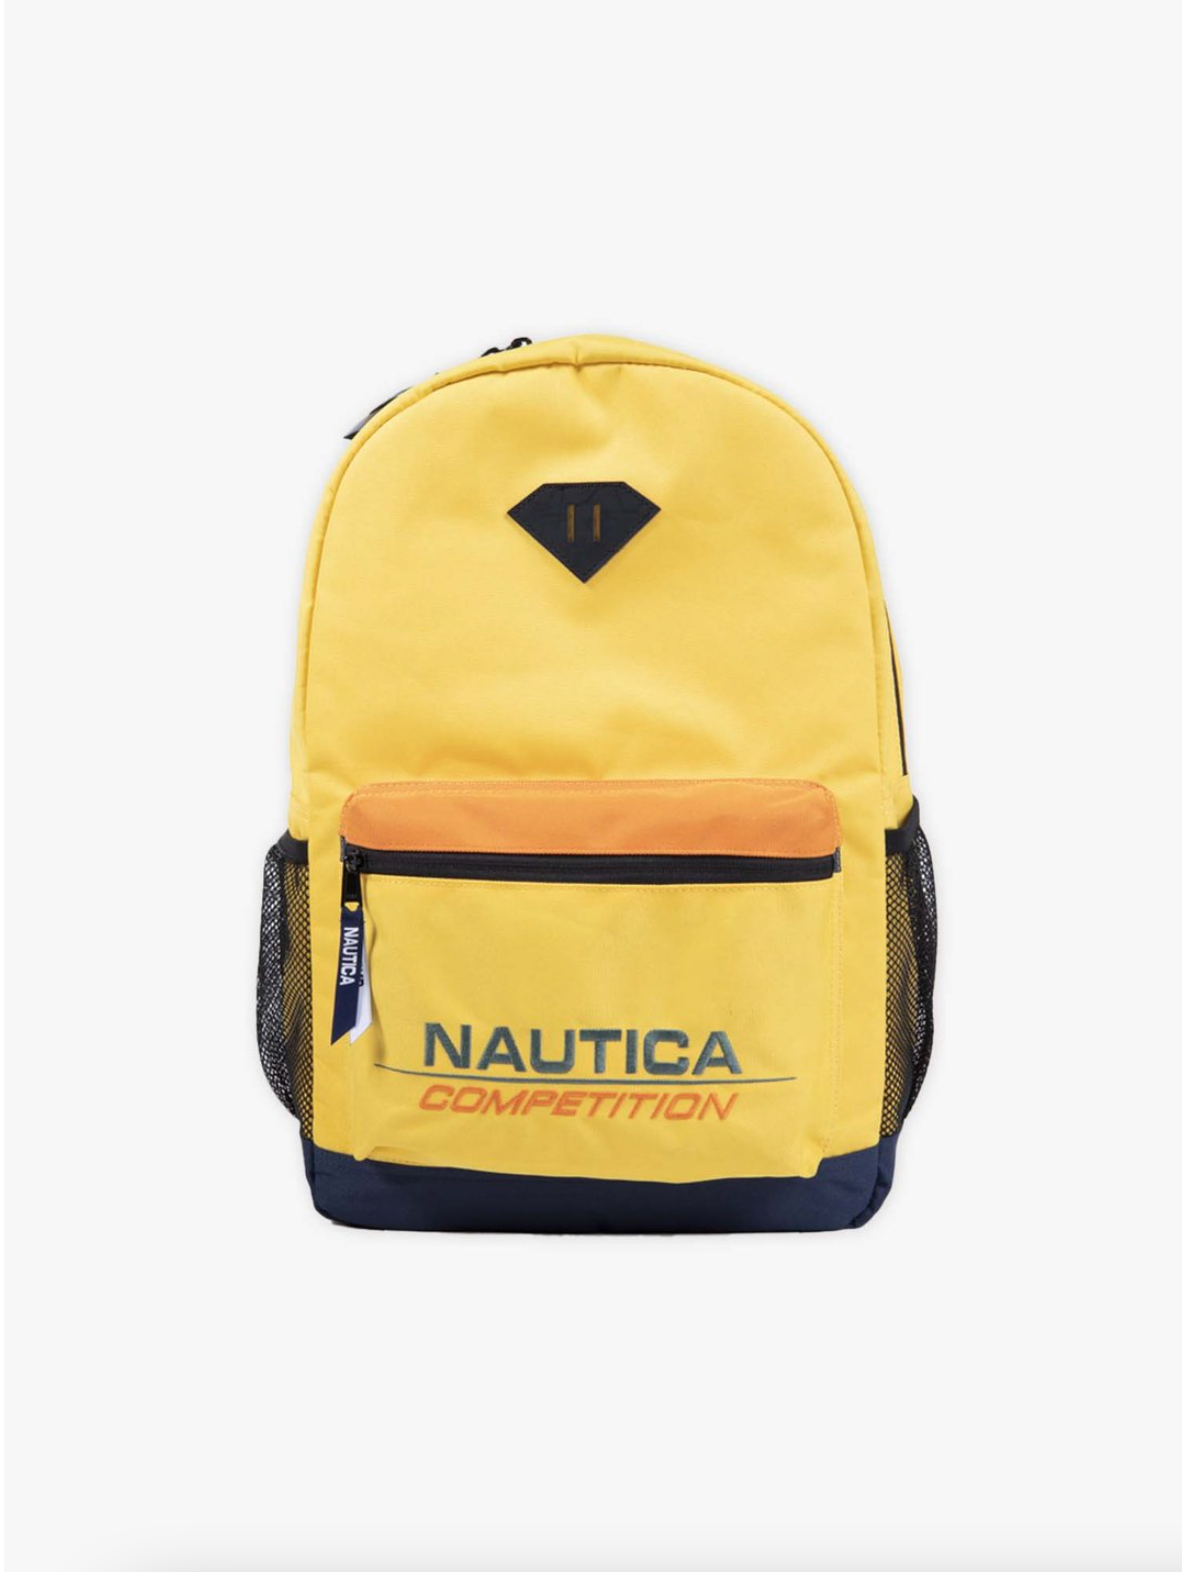 Diamond Supply Company Nautica Backpack